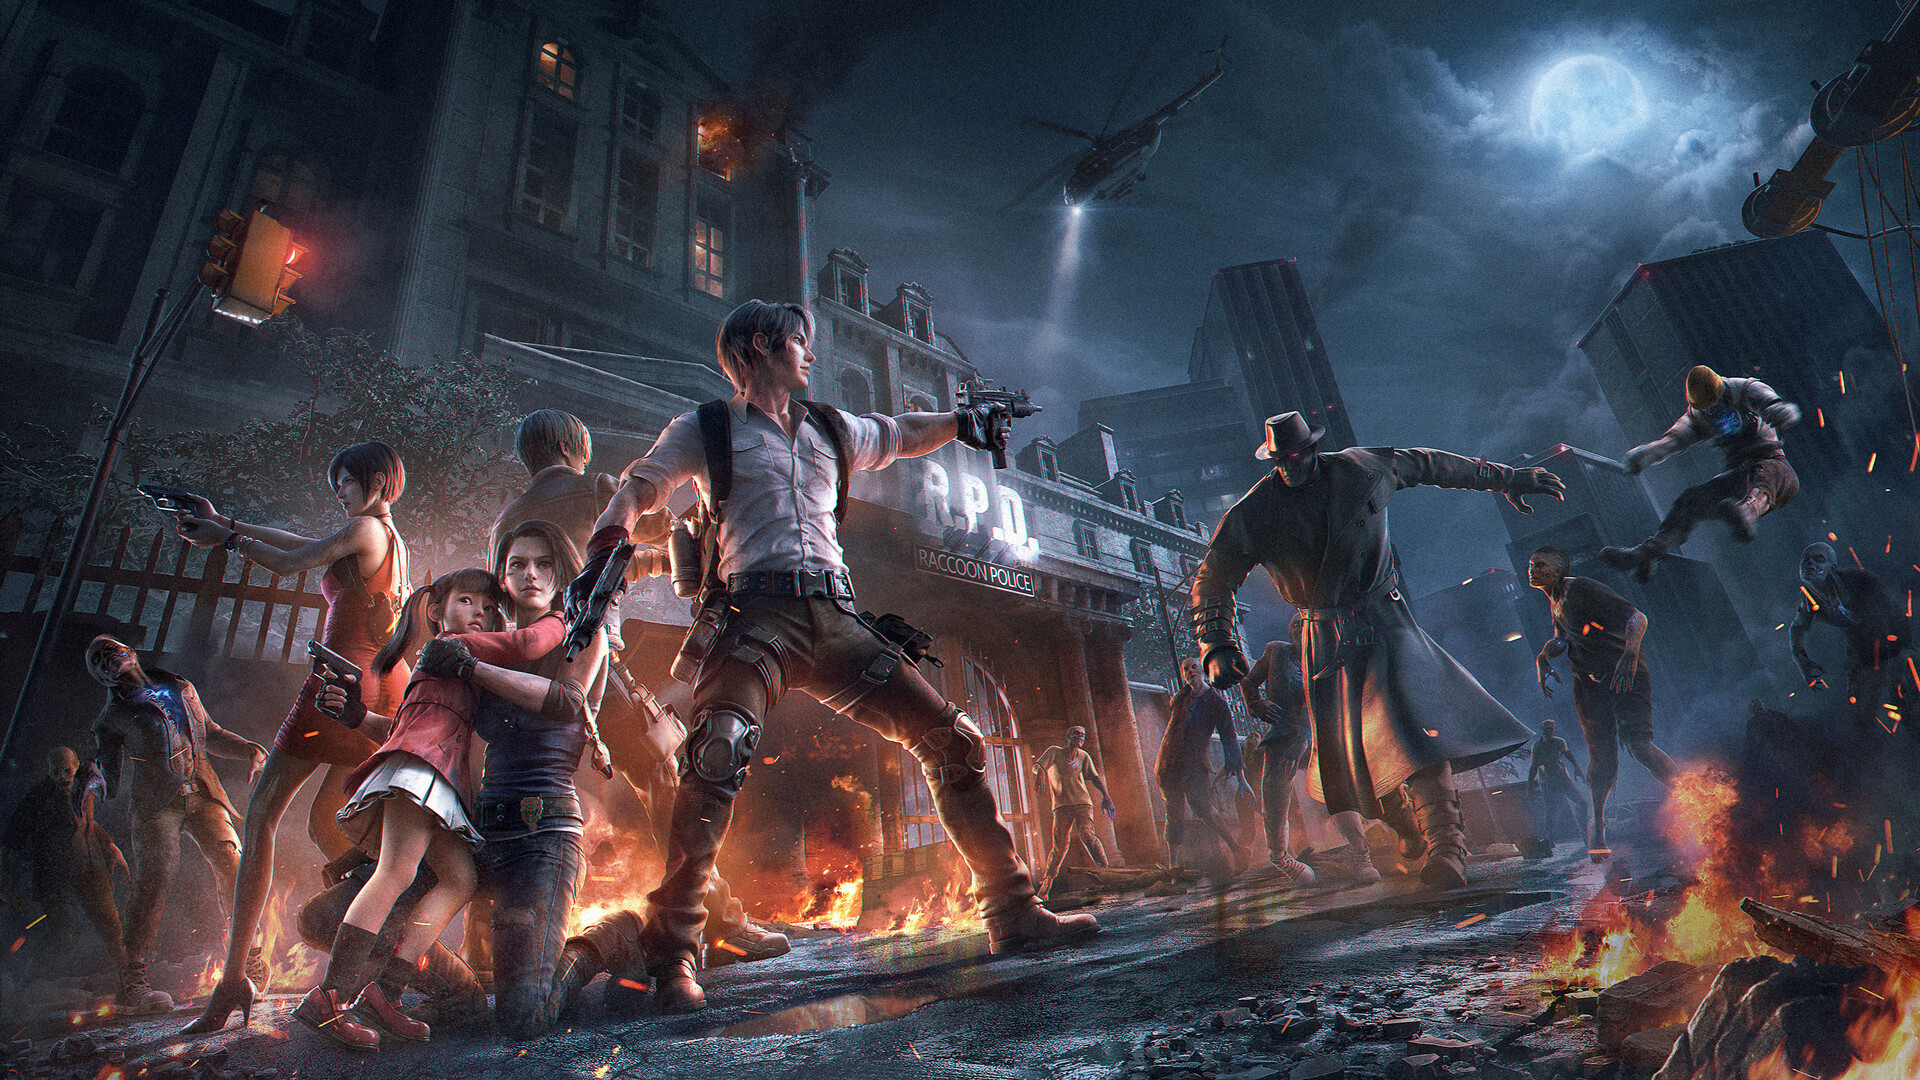 Wallpaper de Resident Evil 4 supercriativo viraliza no Twitter